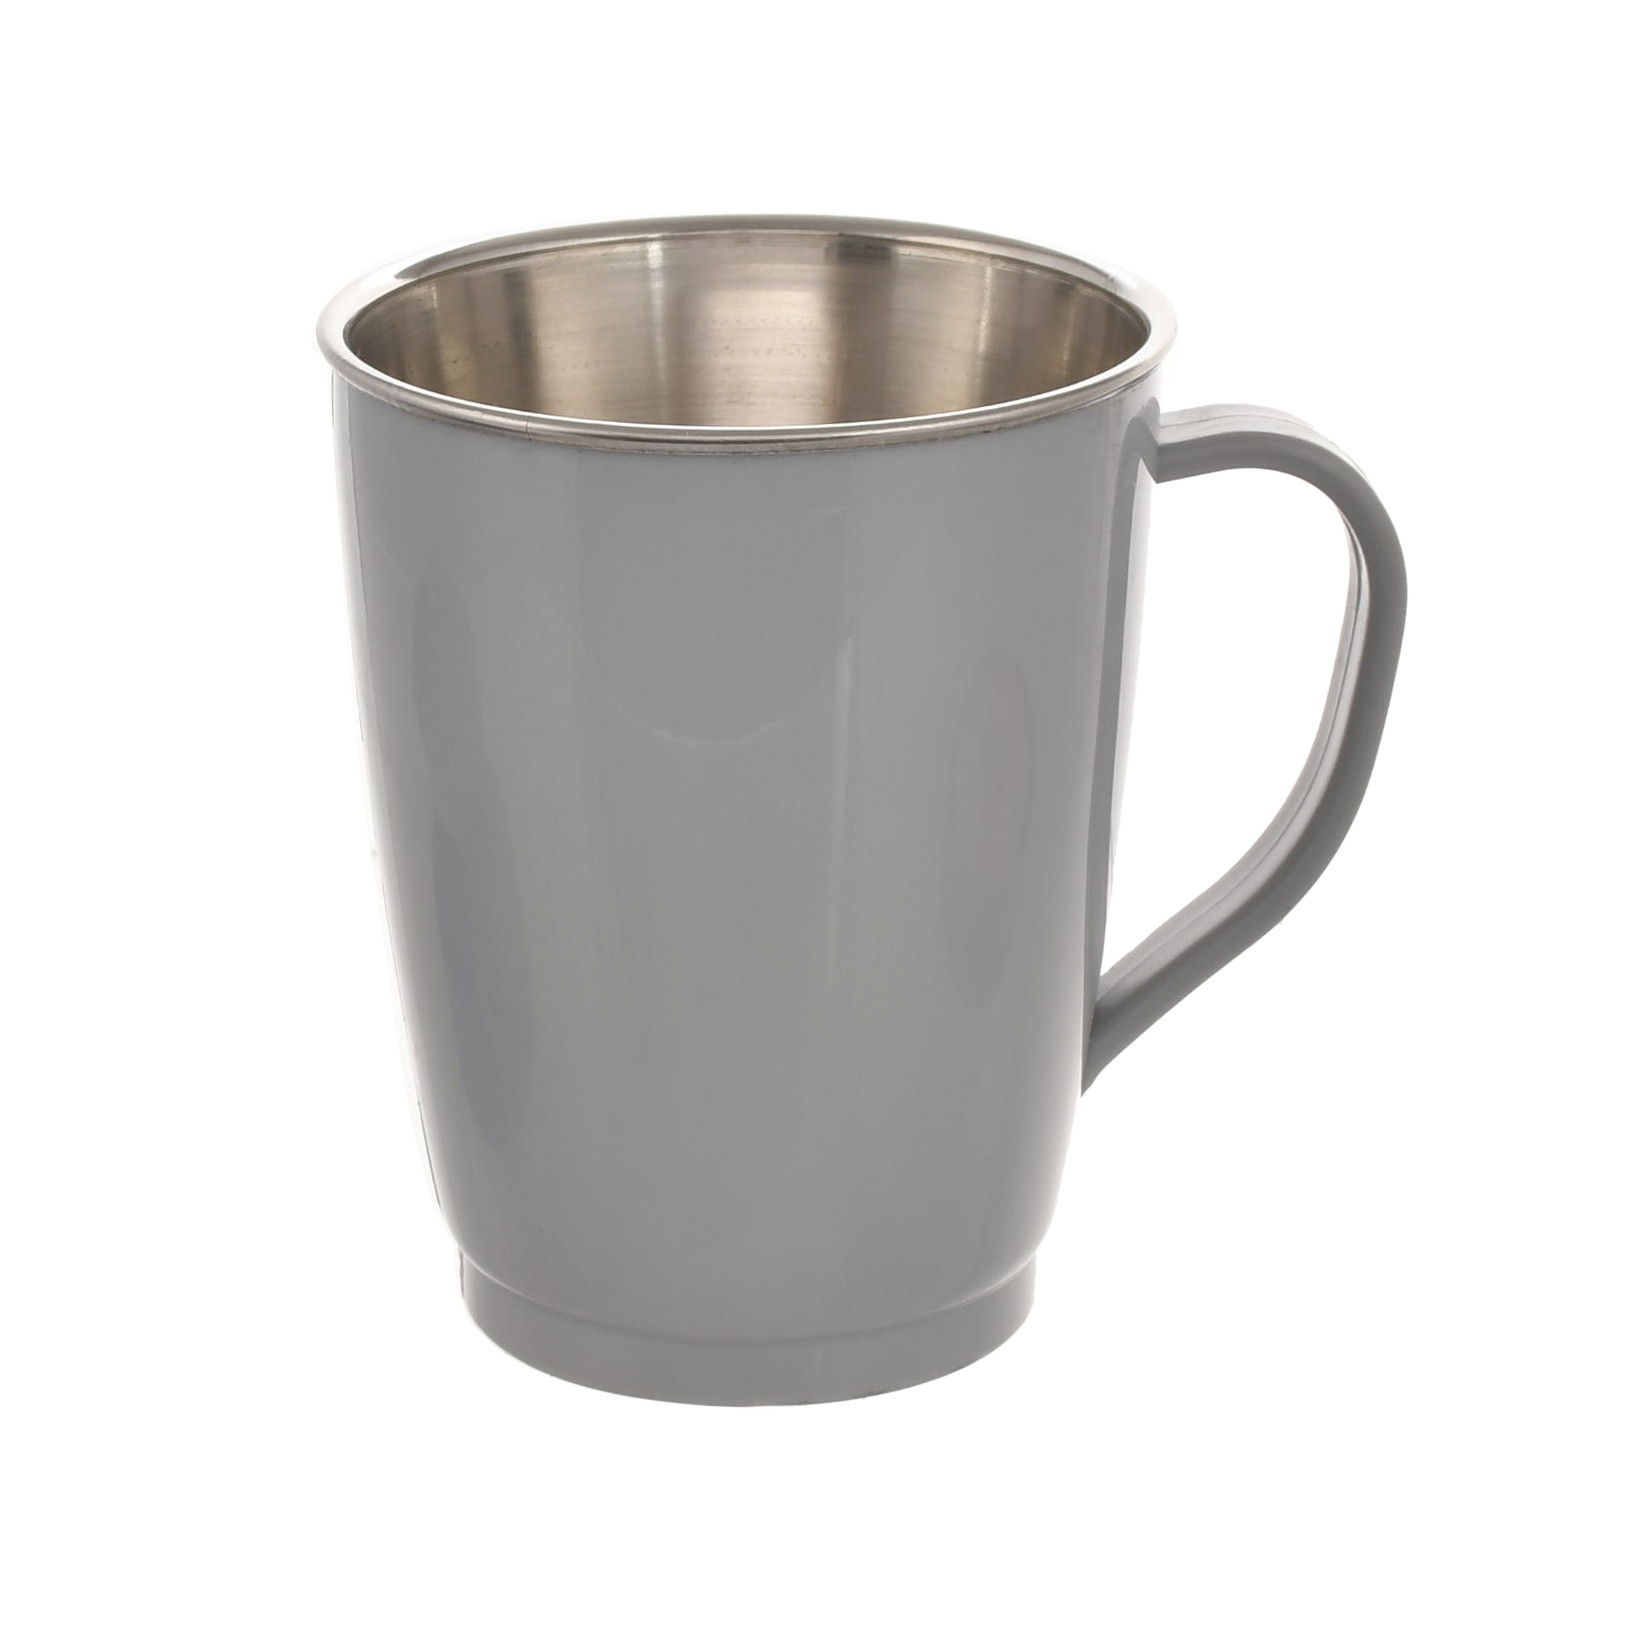 Kuber Industries Disney Printed Food Grade BPA Free Tea/Coffee Mug for Coffee Tea Cocoa, Camping Mugs with Lid, Pack of 2 (Grey & Red)